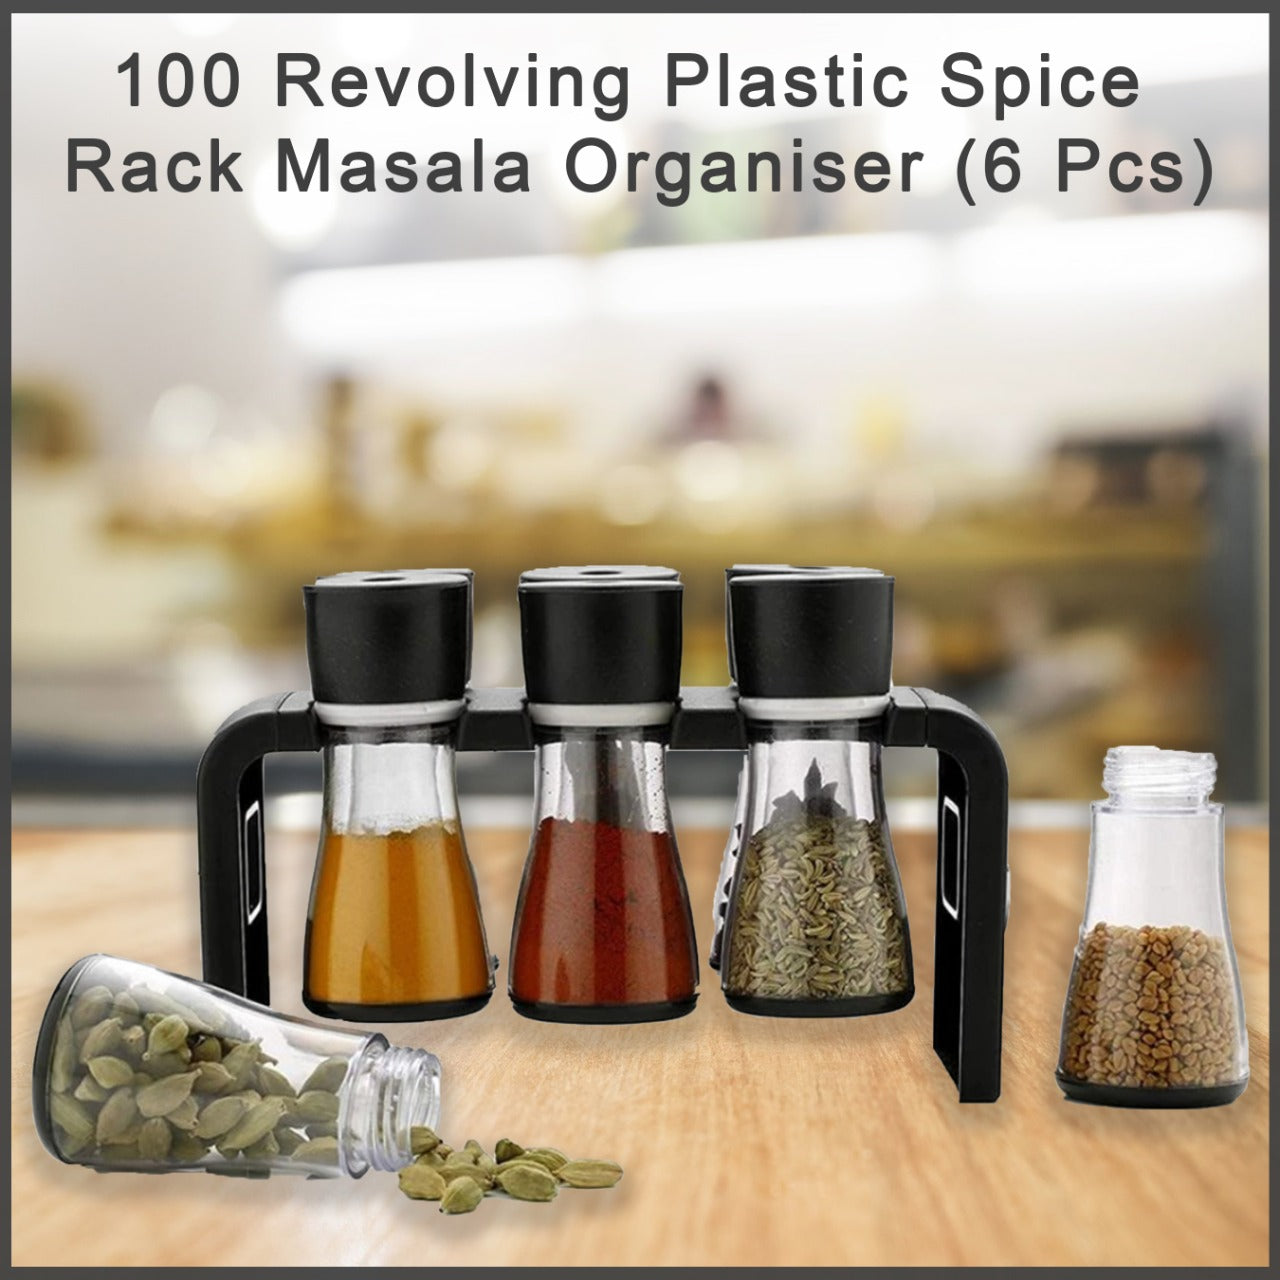 100 Revolving Plastic Spice Rack Masala Organiser (6 Pcs) Dukan Daily